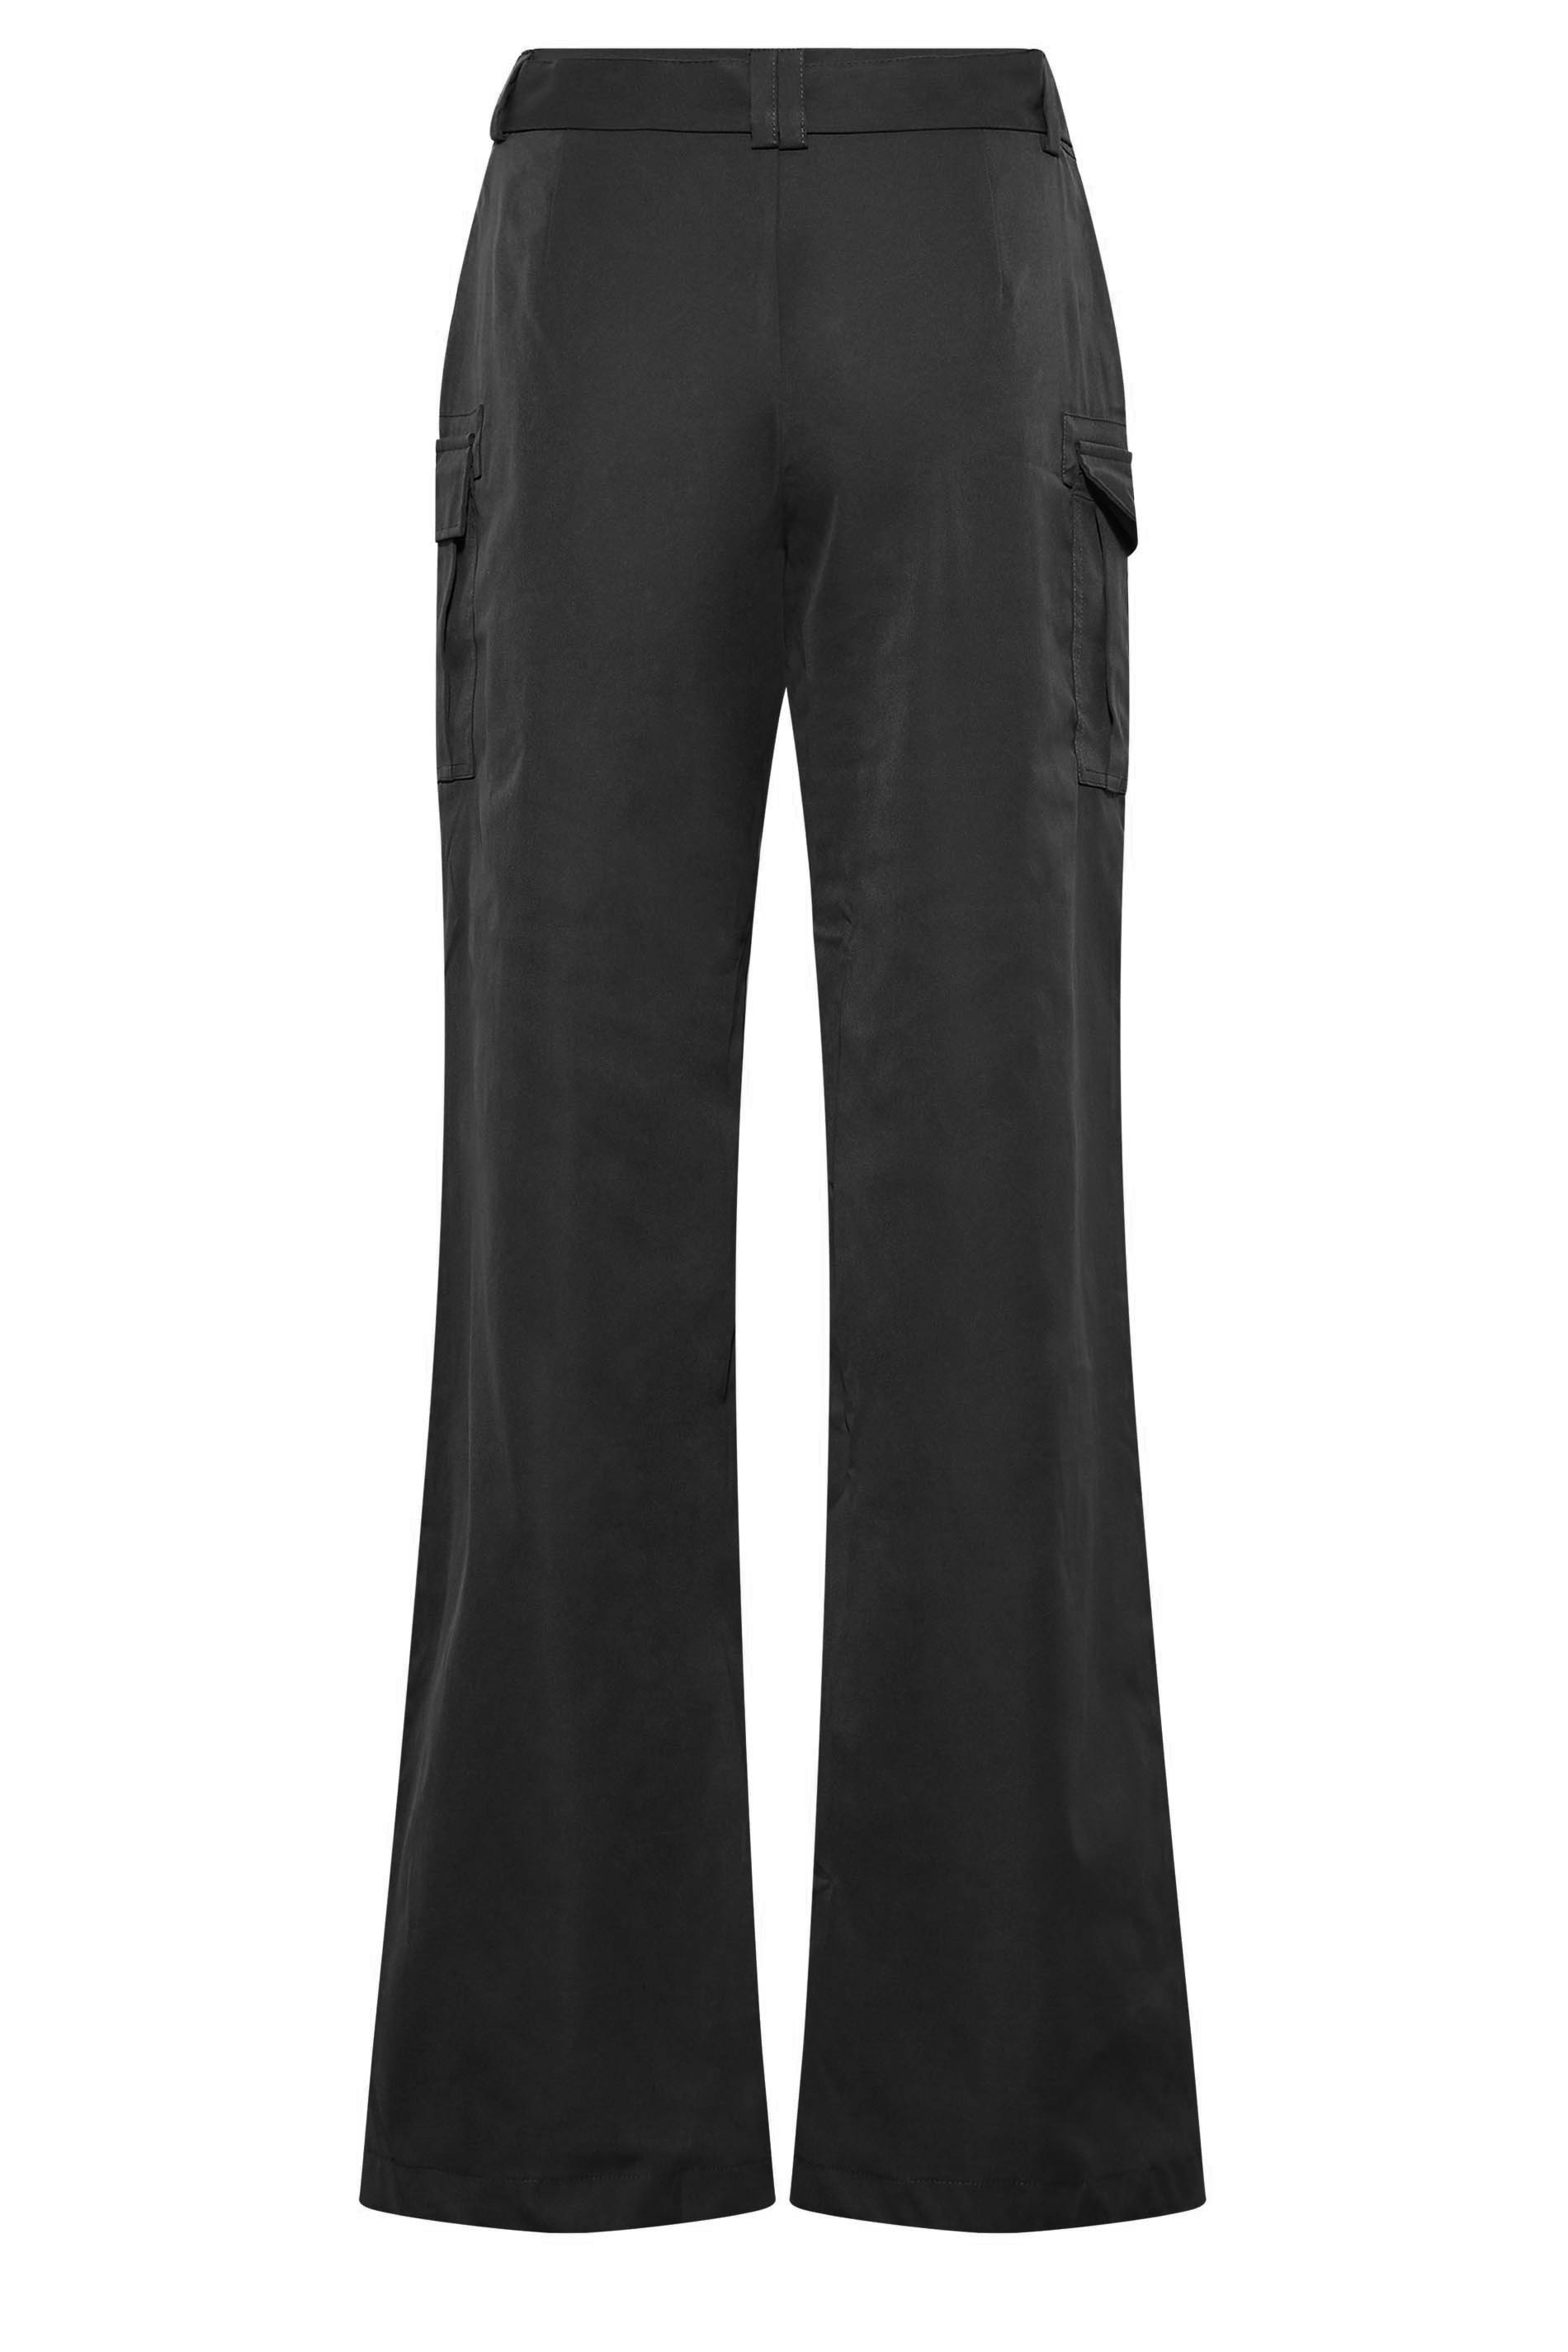 LTS Tall Women's Black Belted Wide Leg Cargo Trousers | Long Tall Sally 2